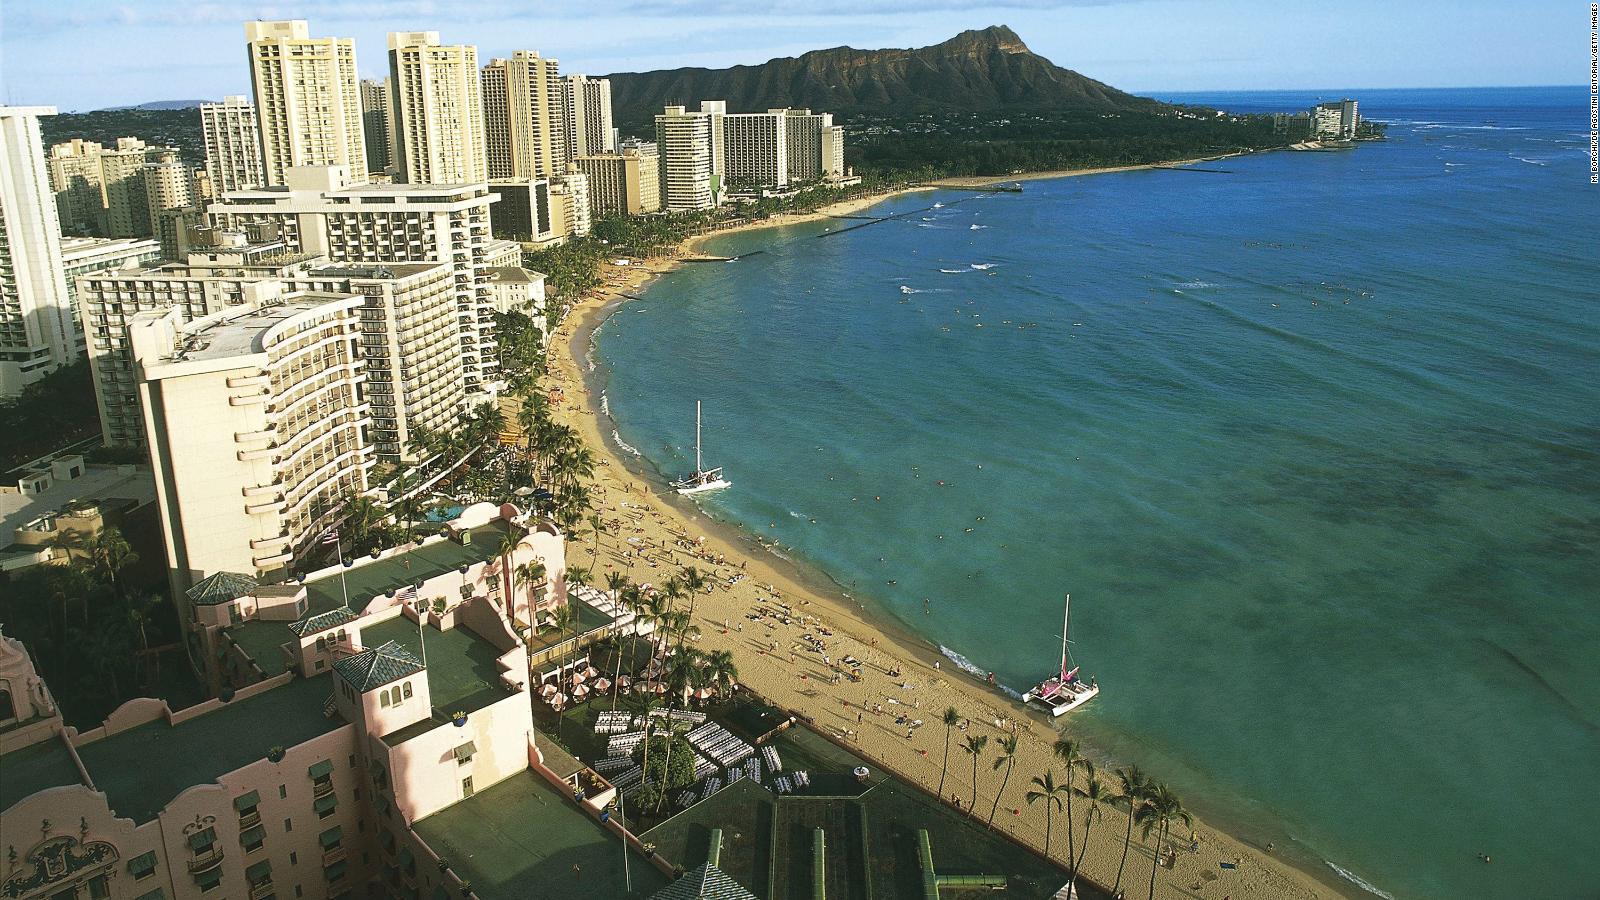 Hawaii's Waikiki Beach could soon be underwater because